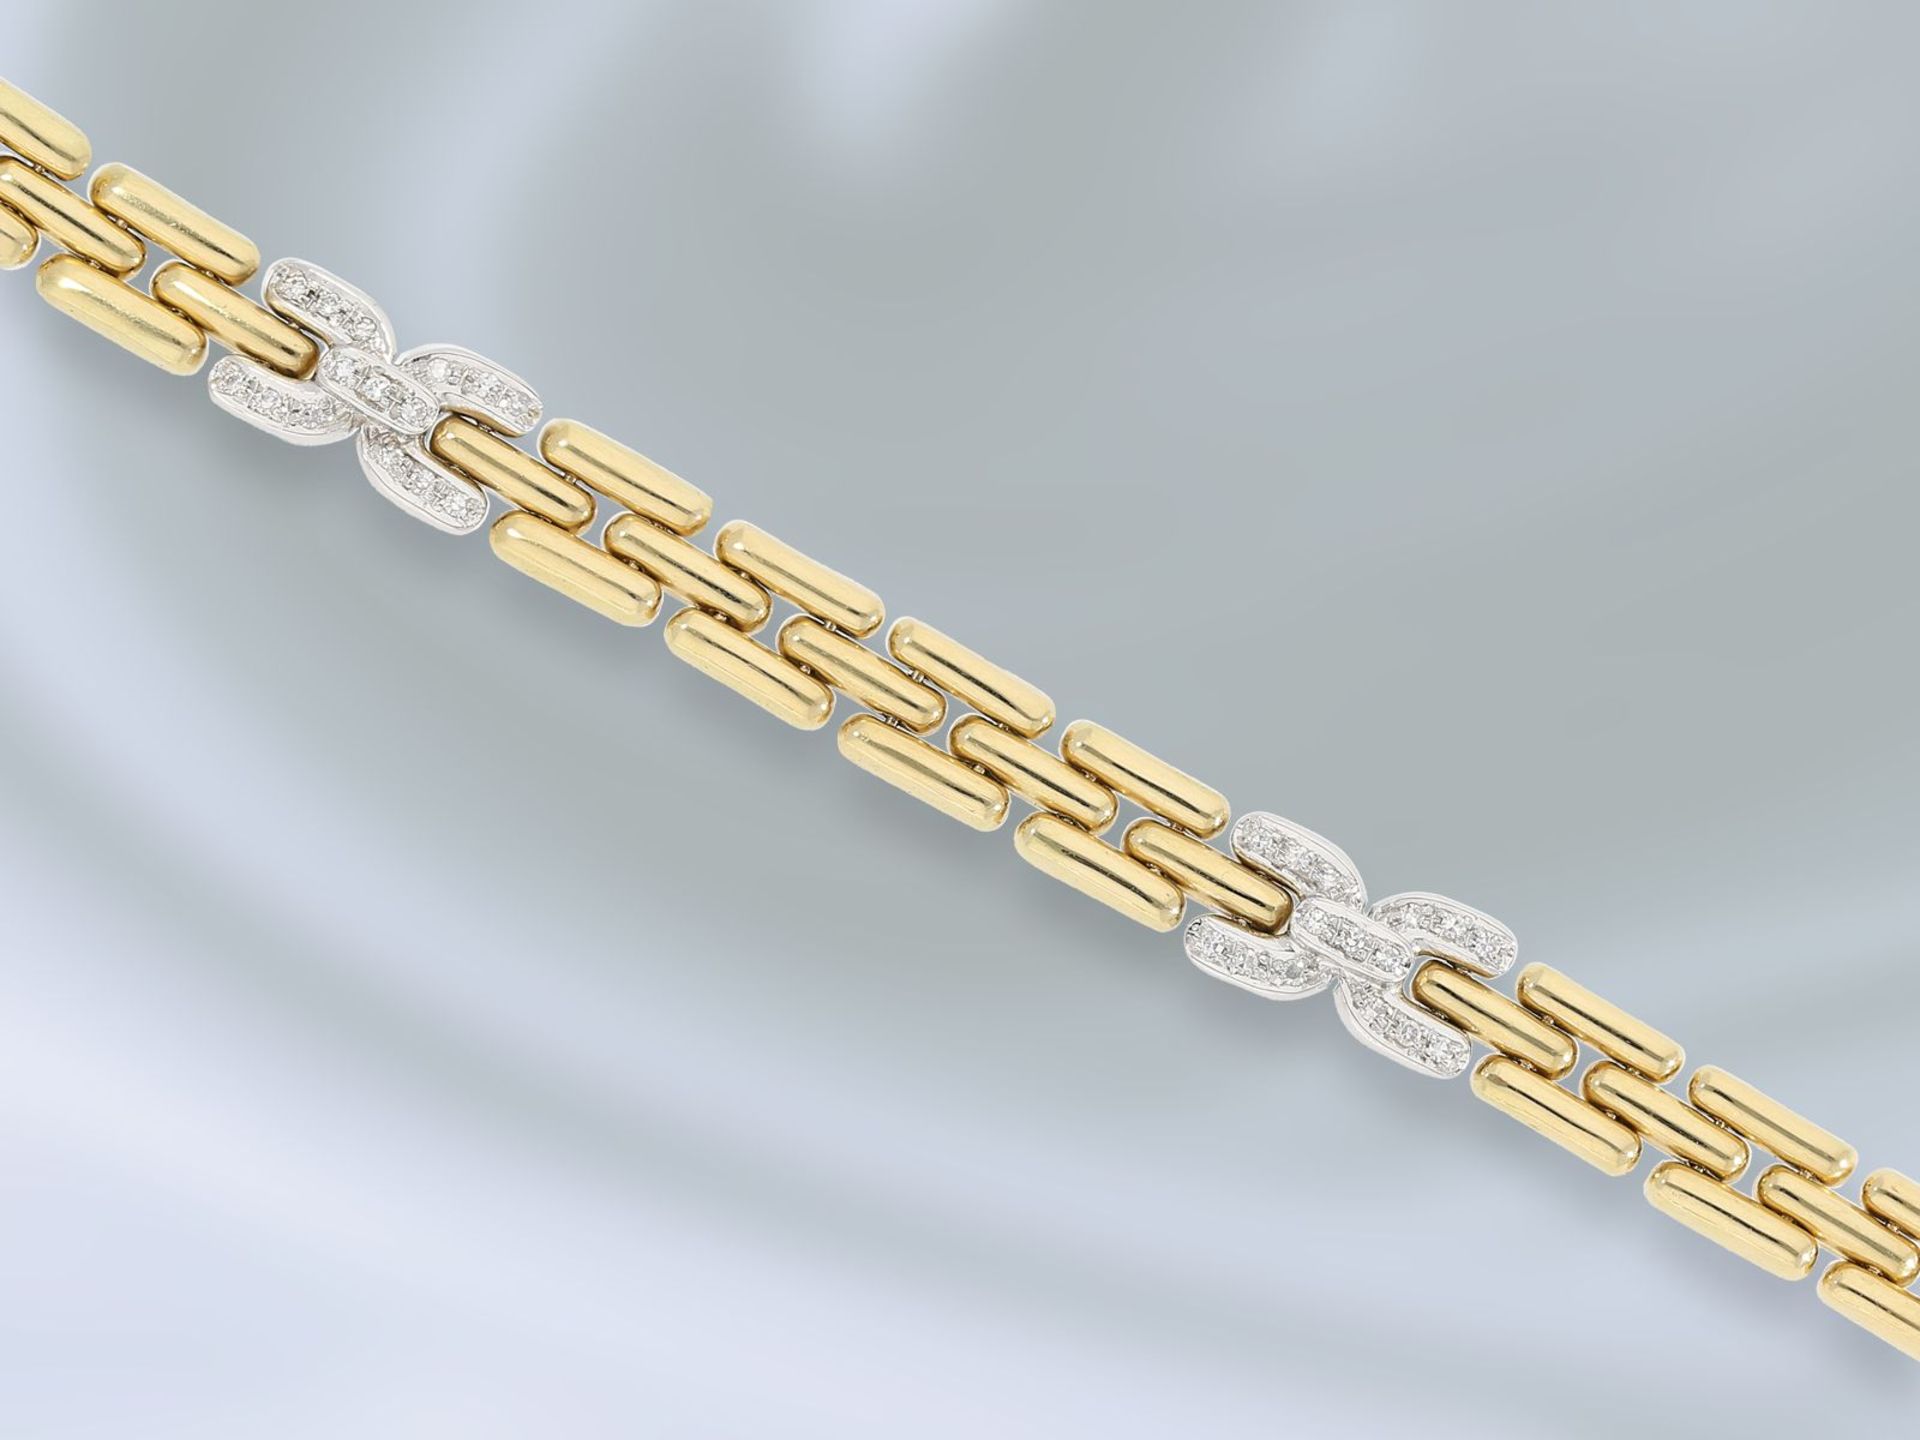 Armband: dekoratives, goldenes Armband mit Diamantbesatz, ca. 0,3ct Ca. 18cm lang, ca. 8mm breit, - Image 2 of 2